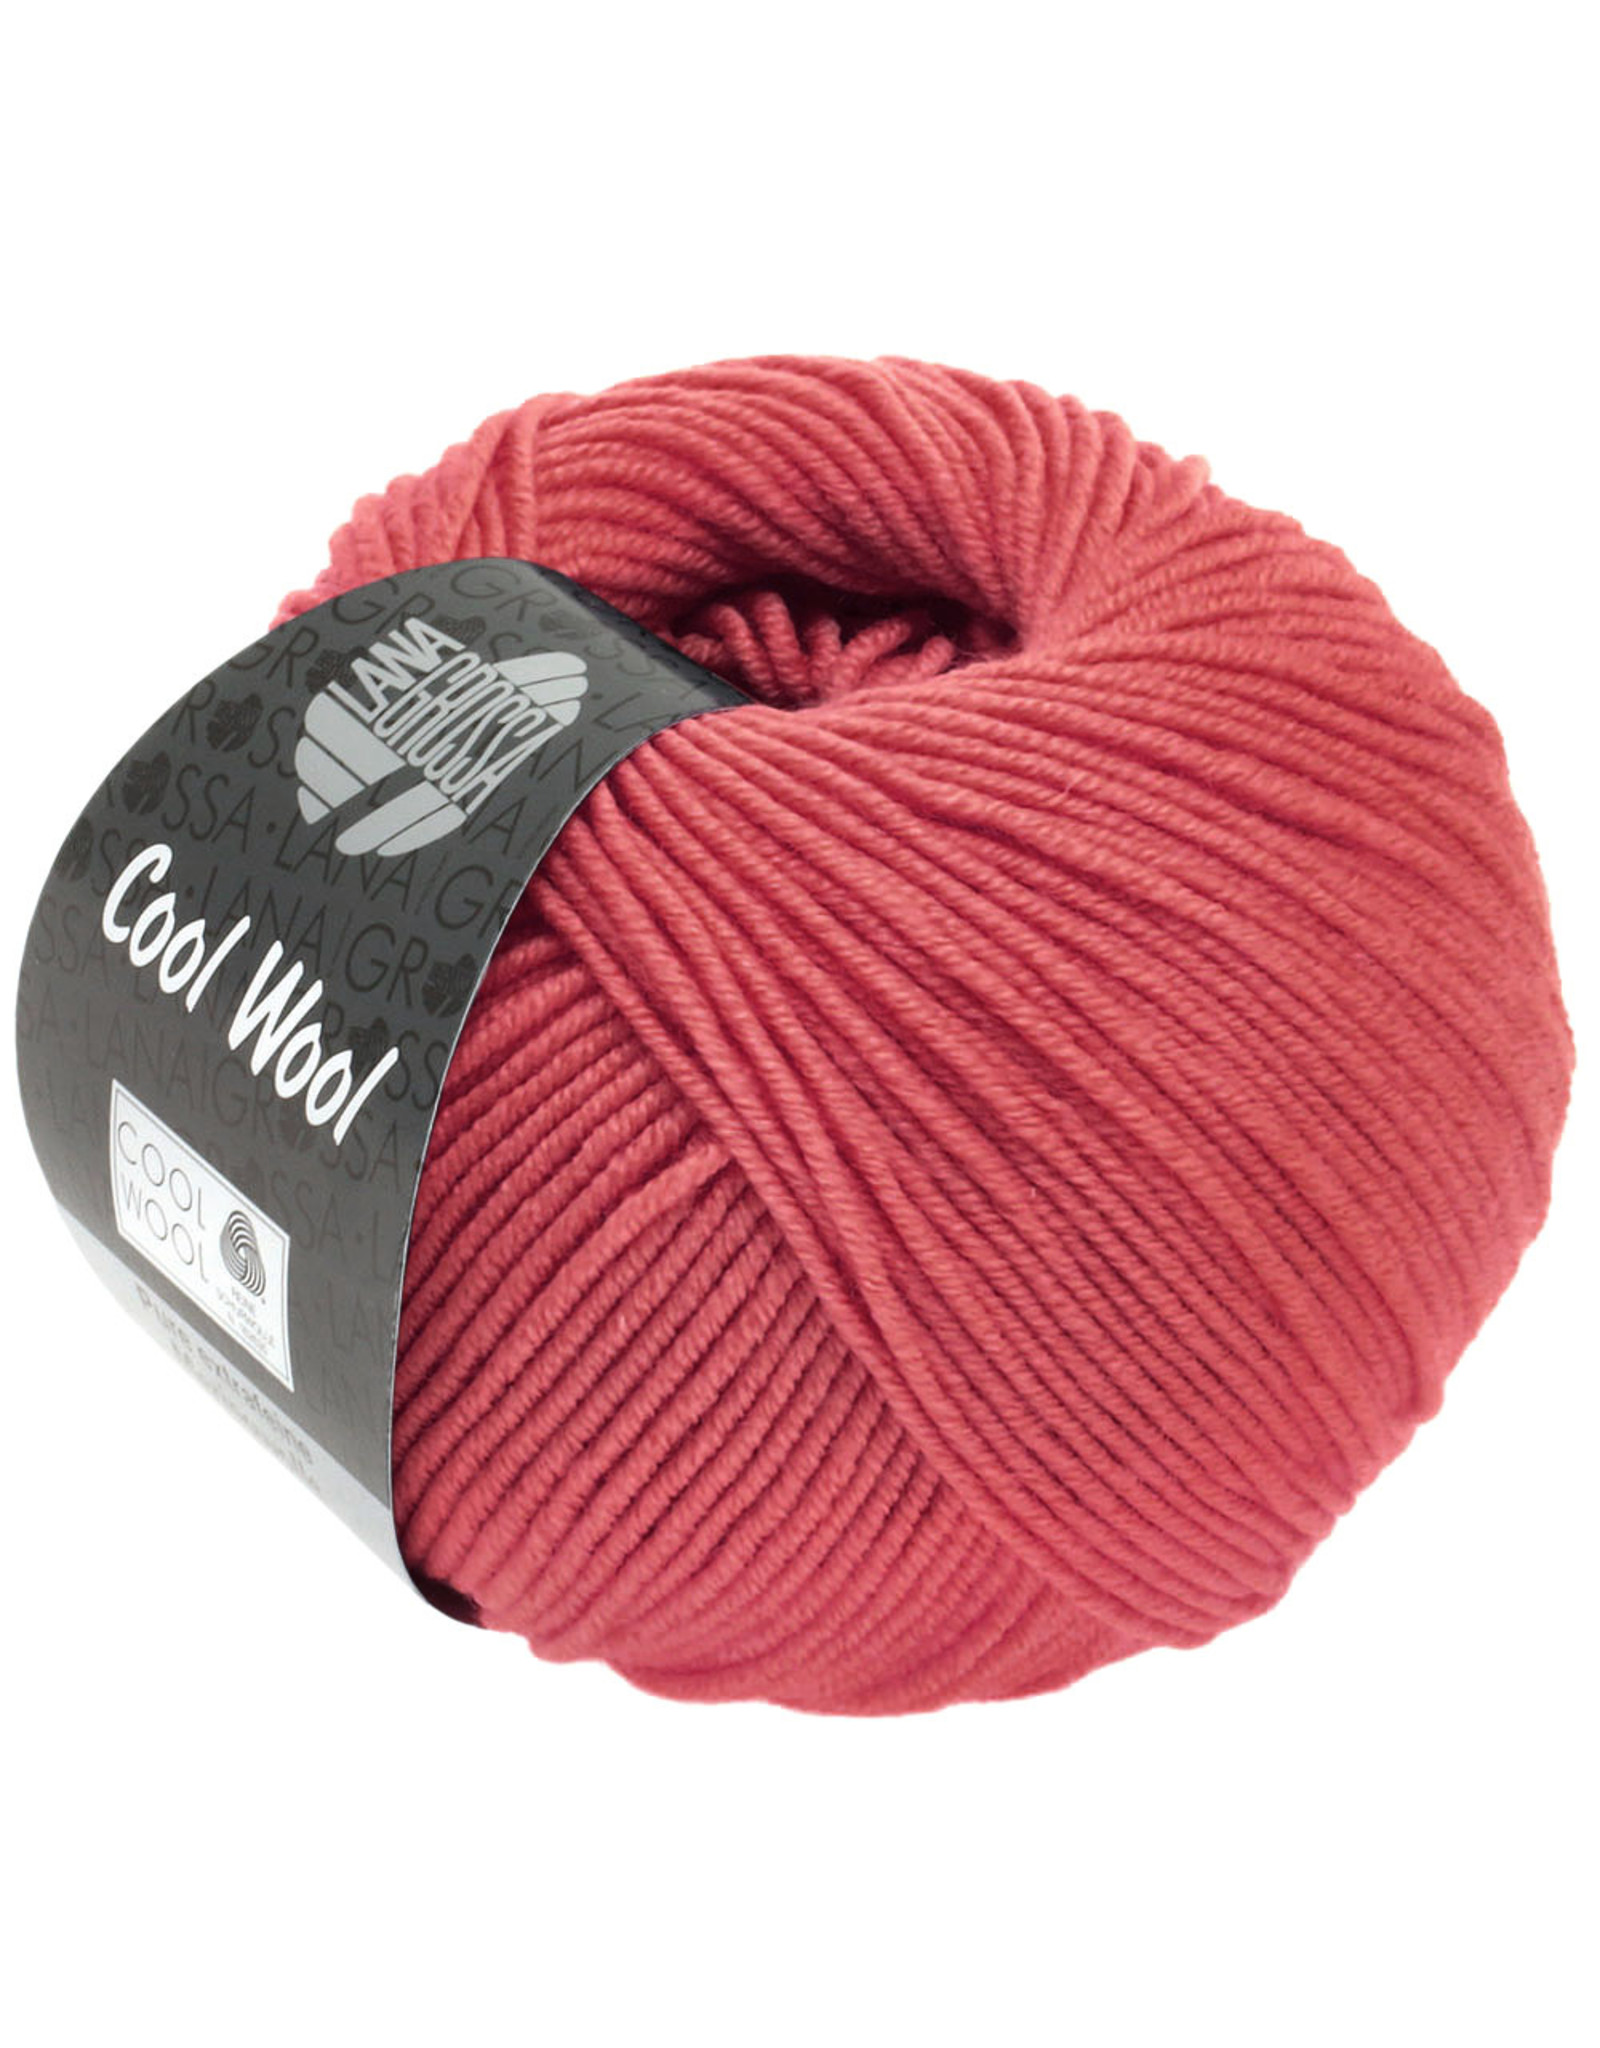 Lana Grossa Lana Grossa Cool wool 2052